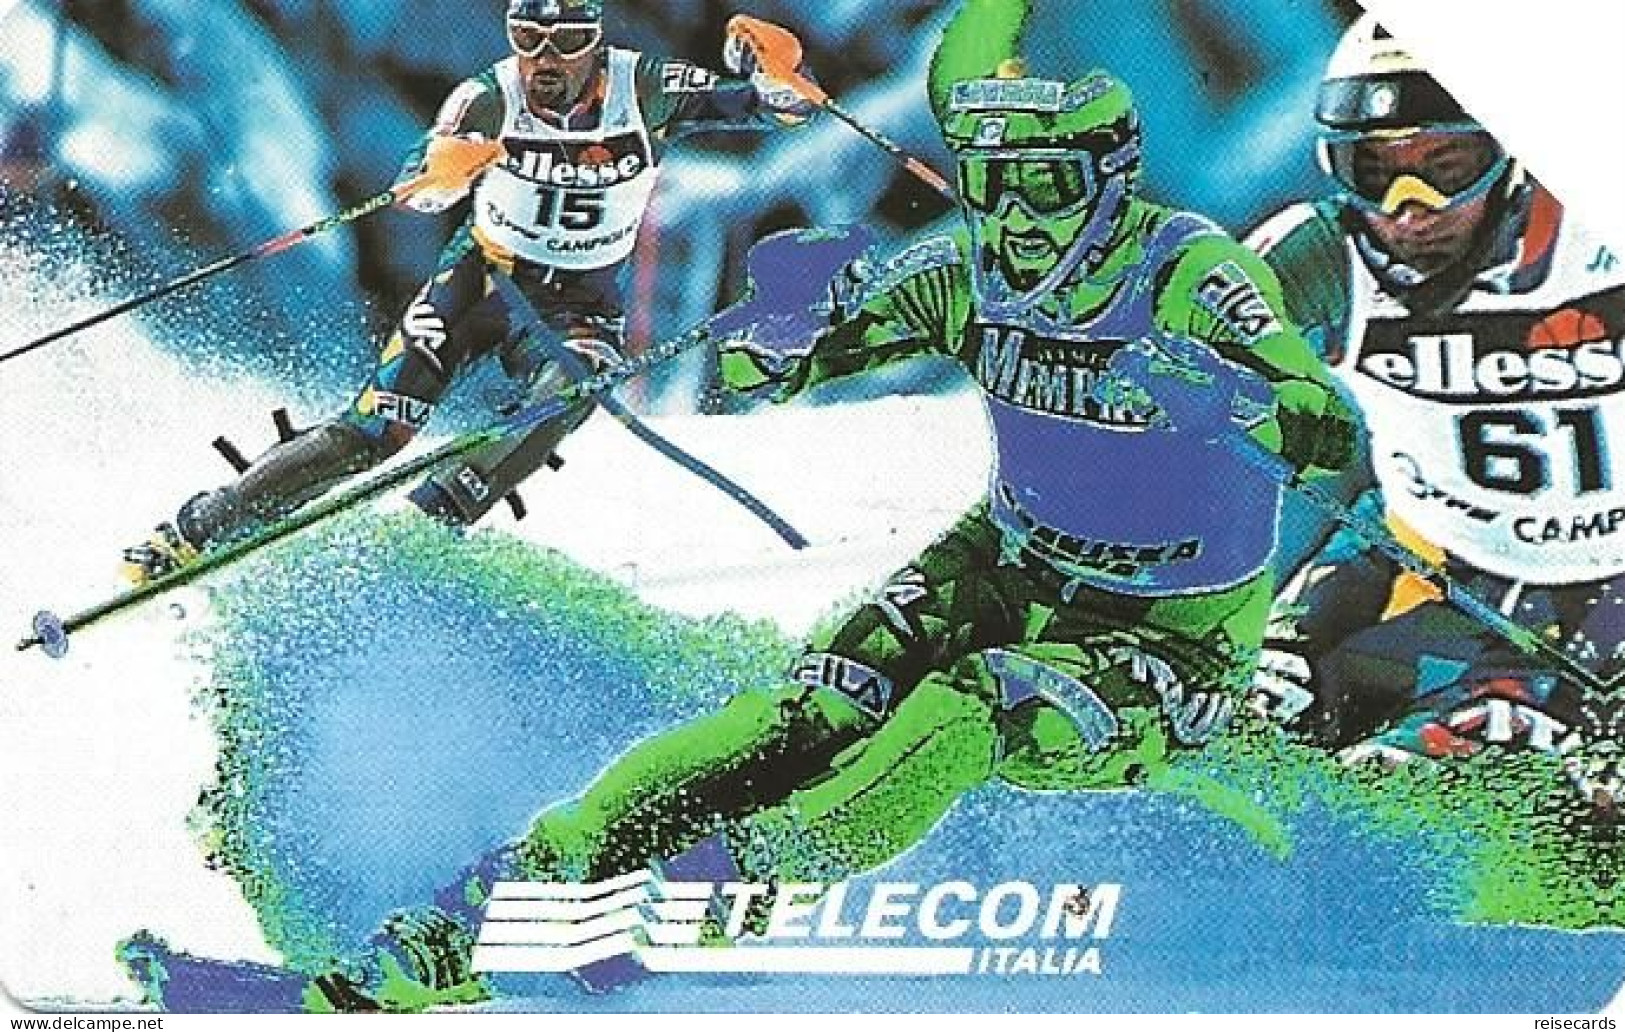 Italy: Telecom Italia - Campionati Mondiali Di Sci-Sestriere 1997 - Públicas  Publicitarias